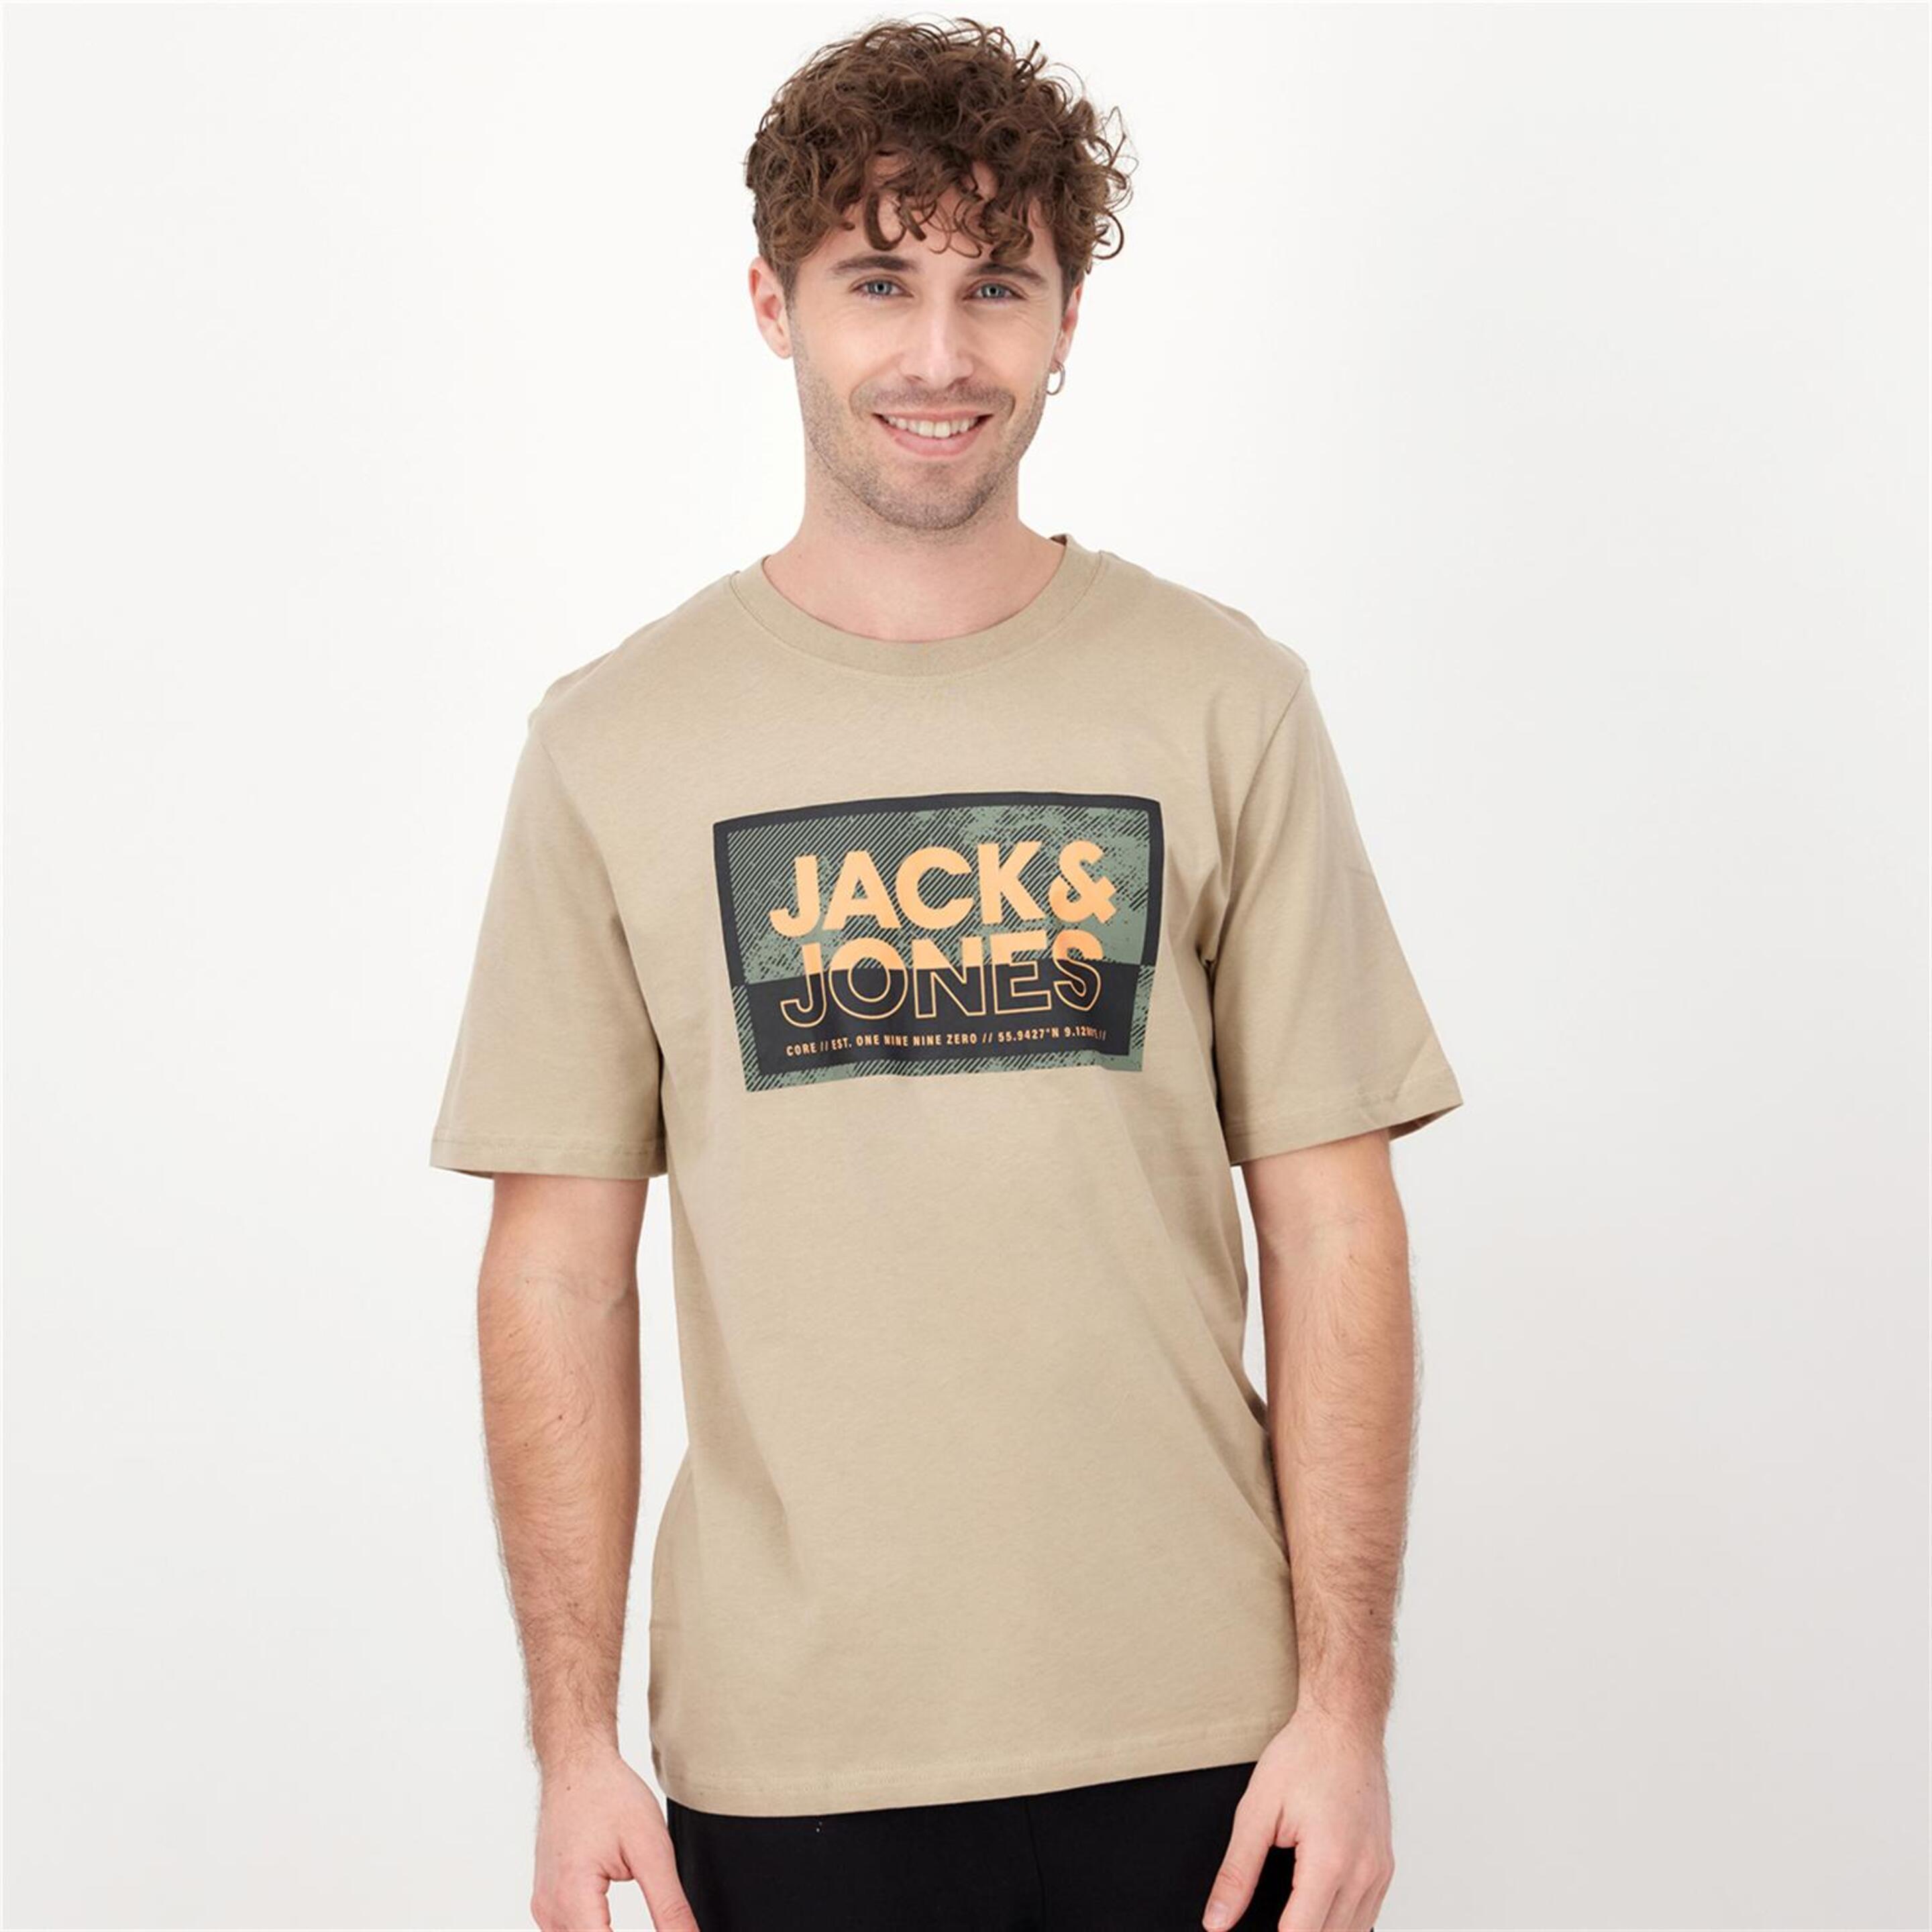 Jack & Jones Logan - Marrón - Camiseta Hombre